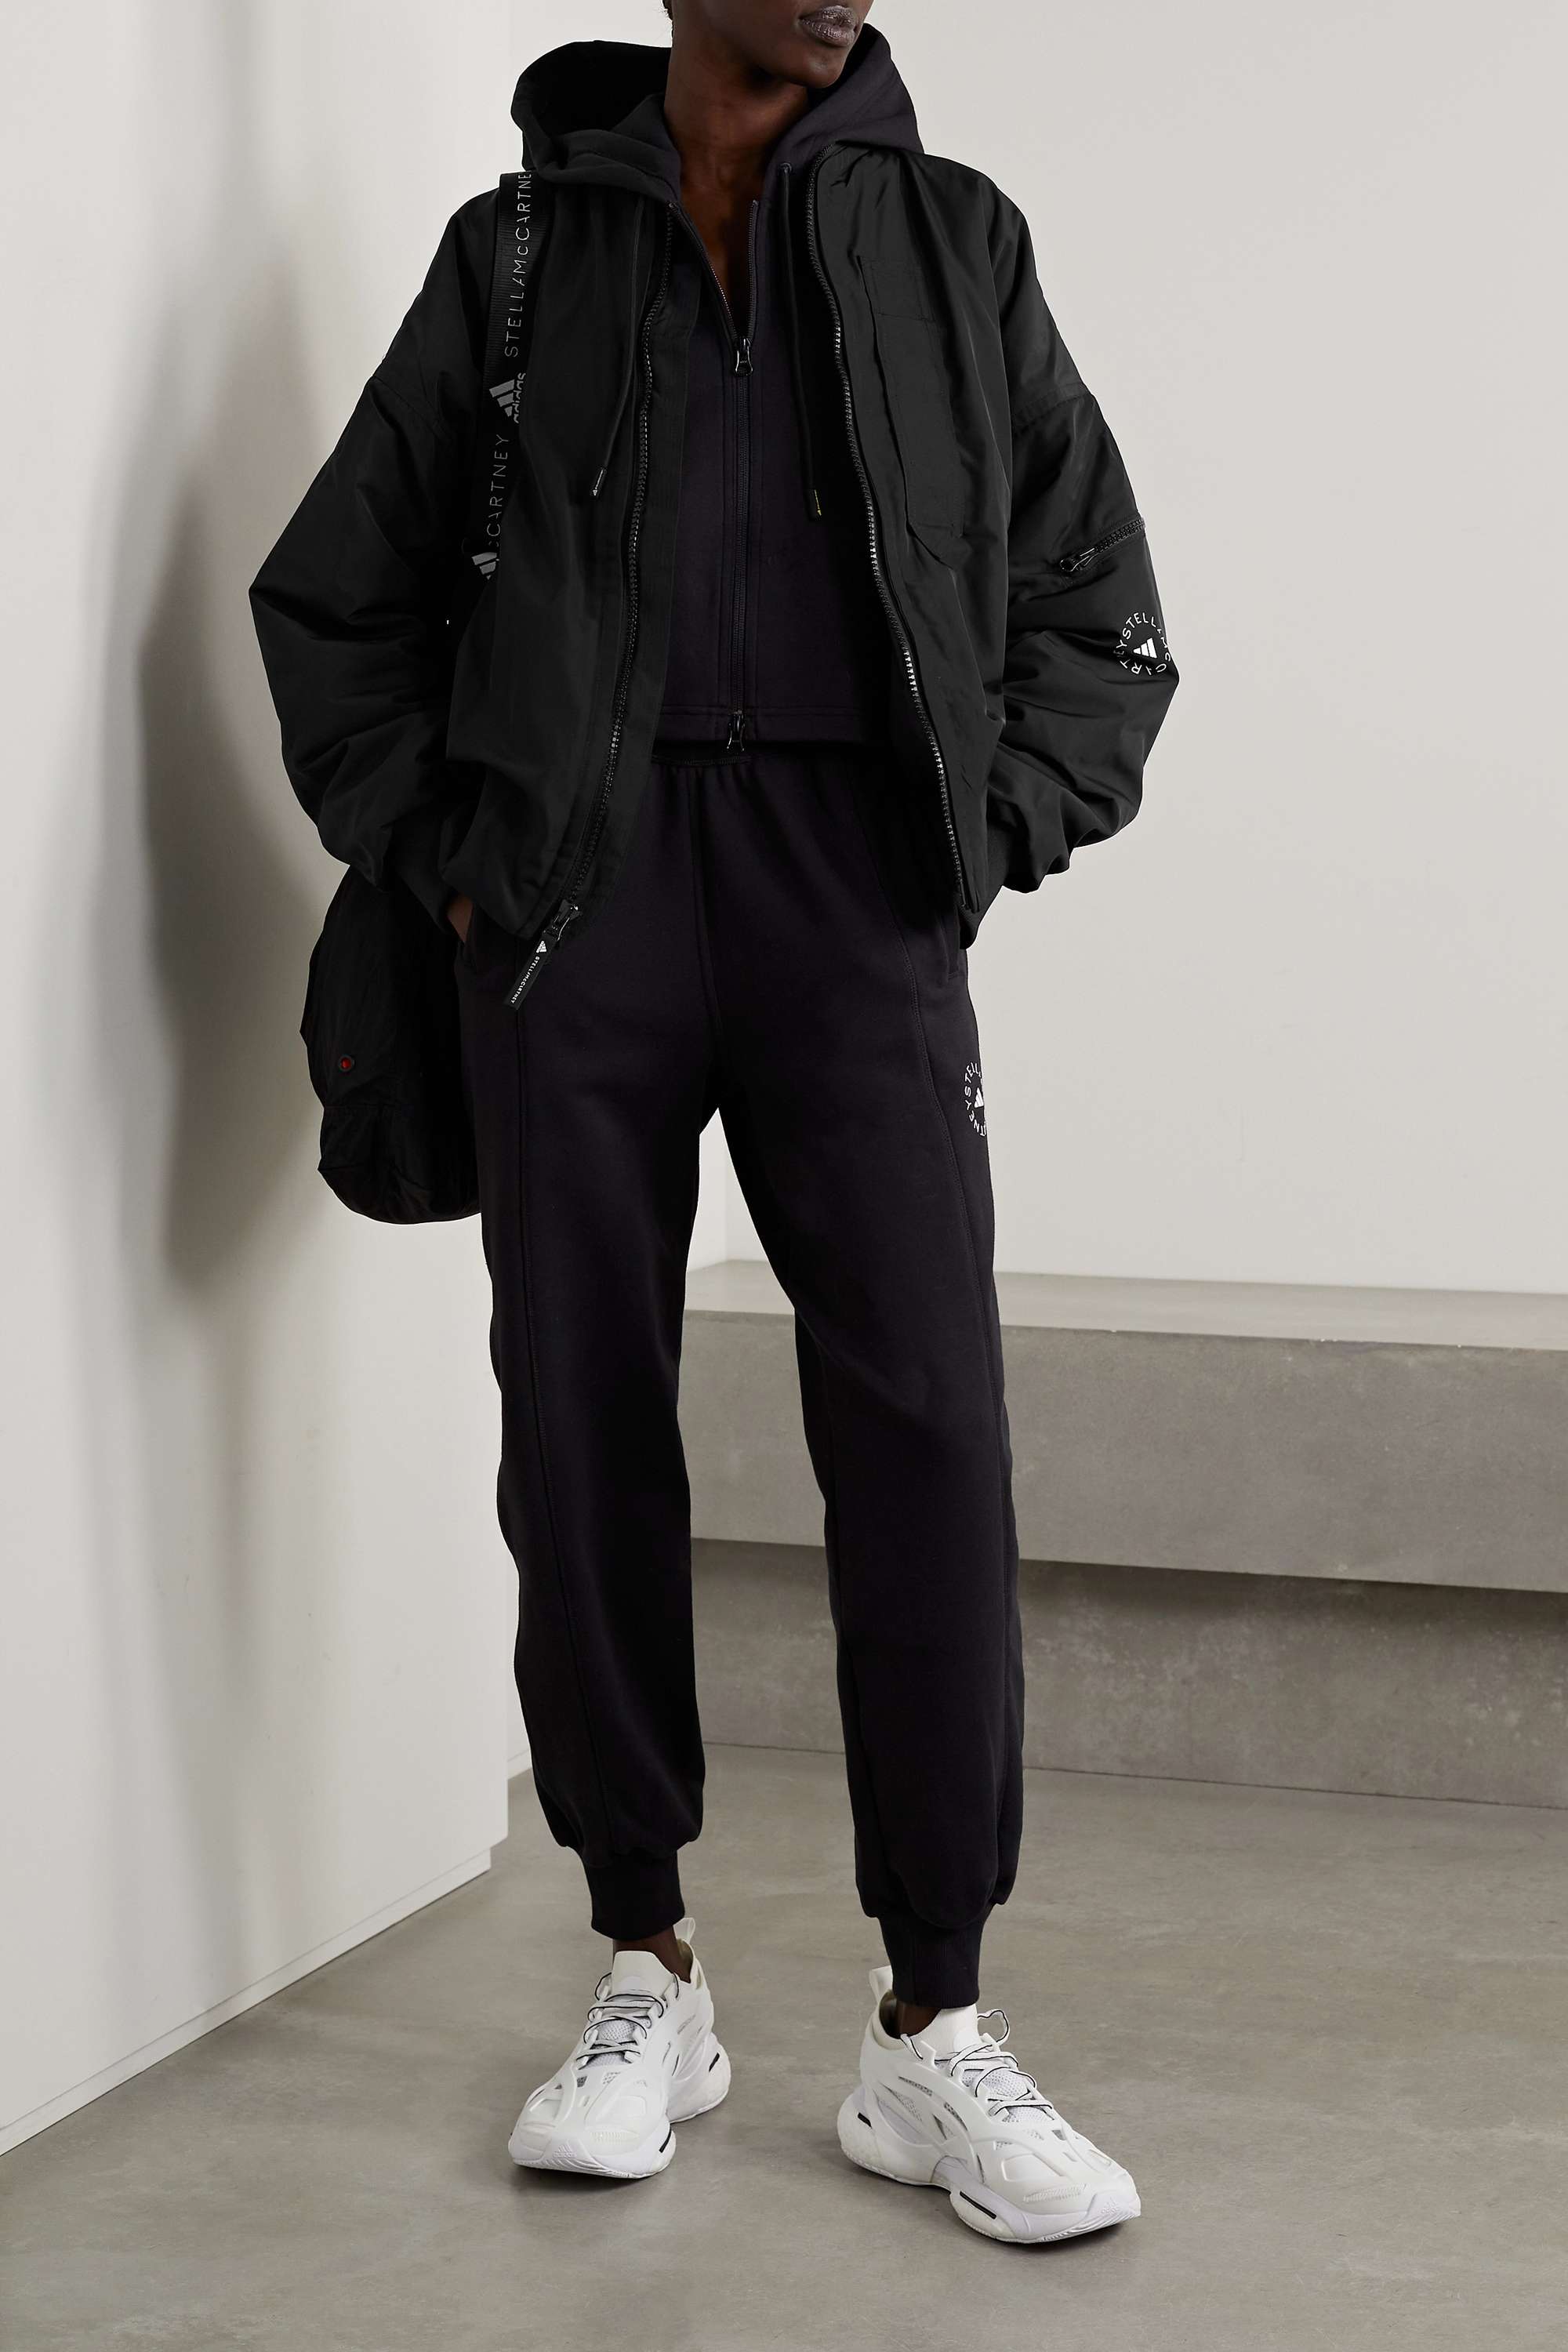 adidas by Stella McCartney: Black Printed Bomber Jacket